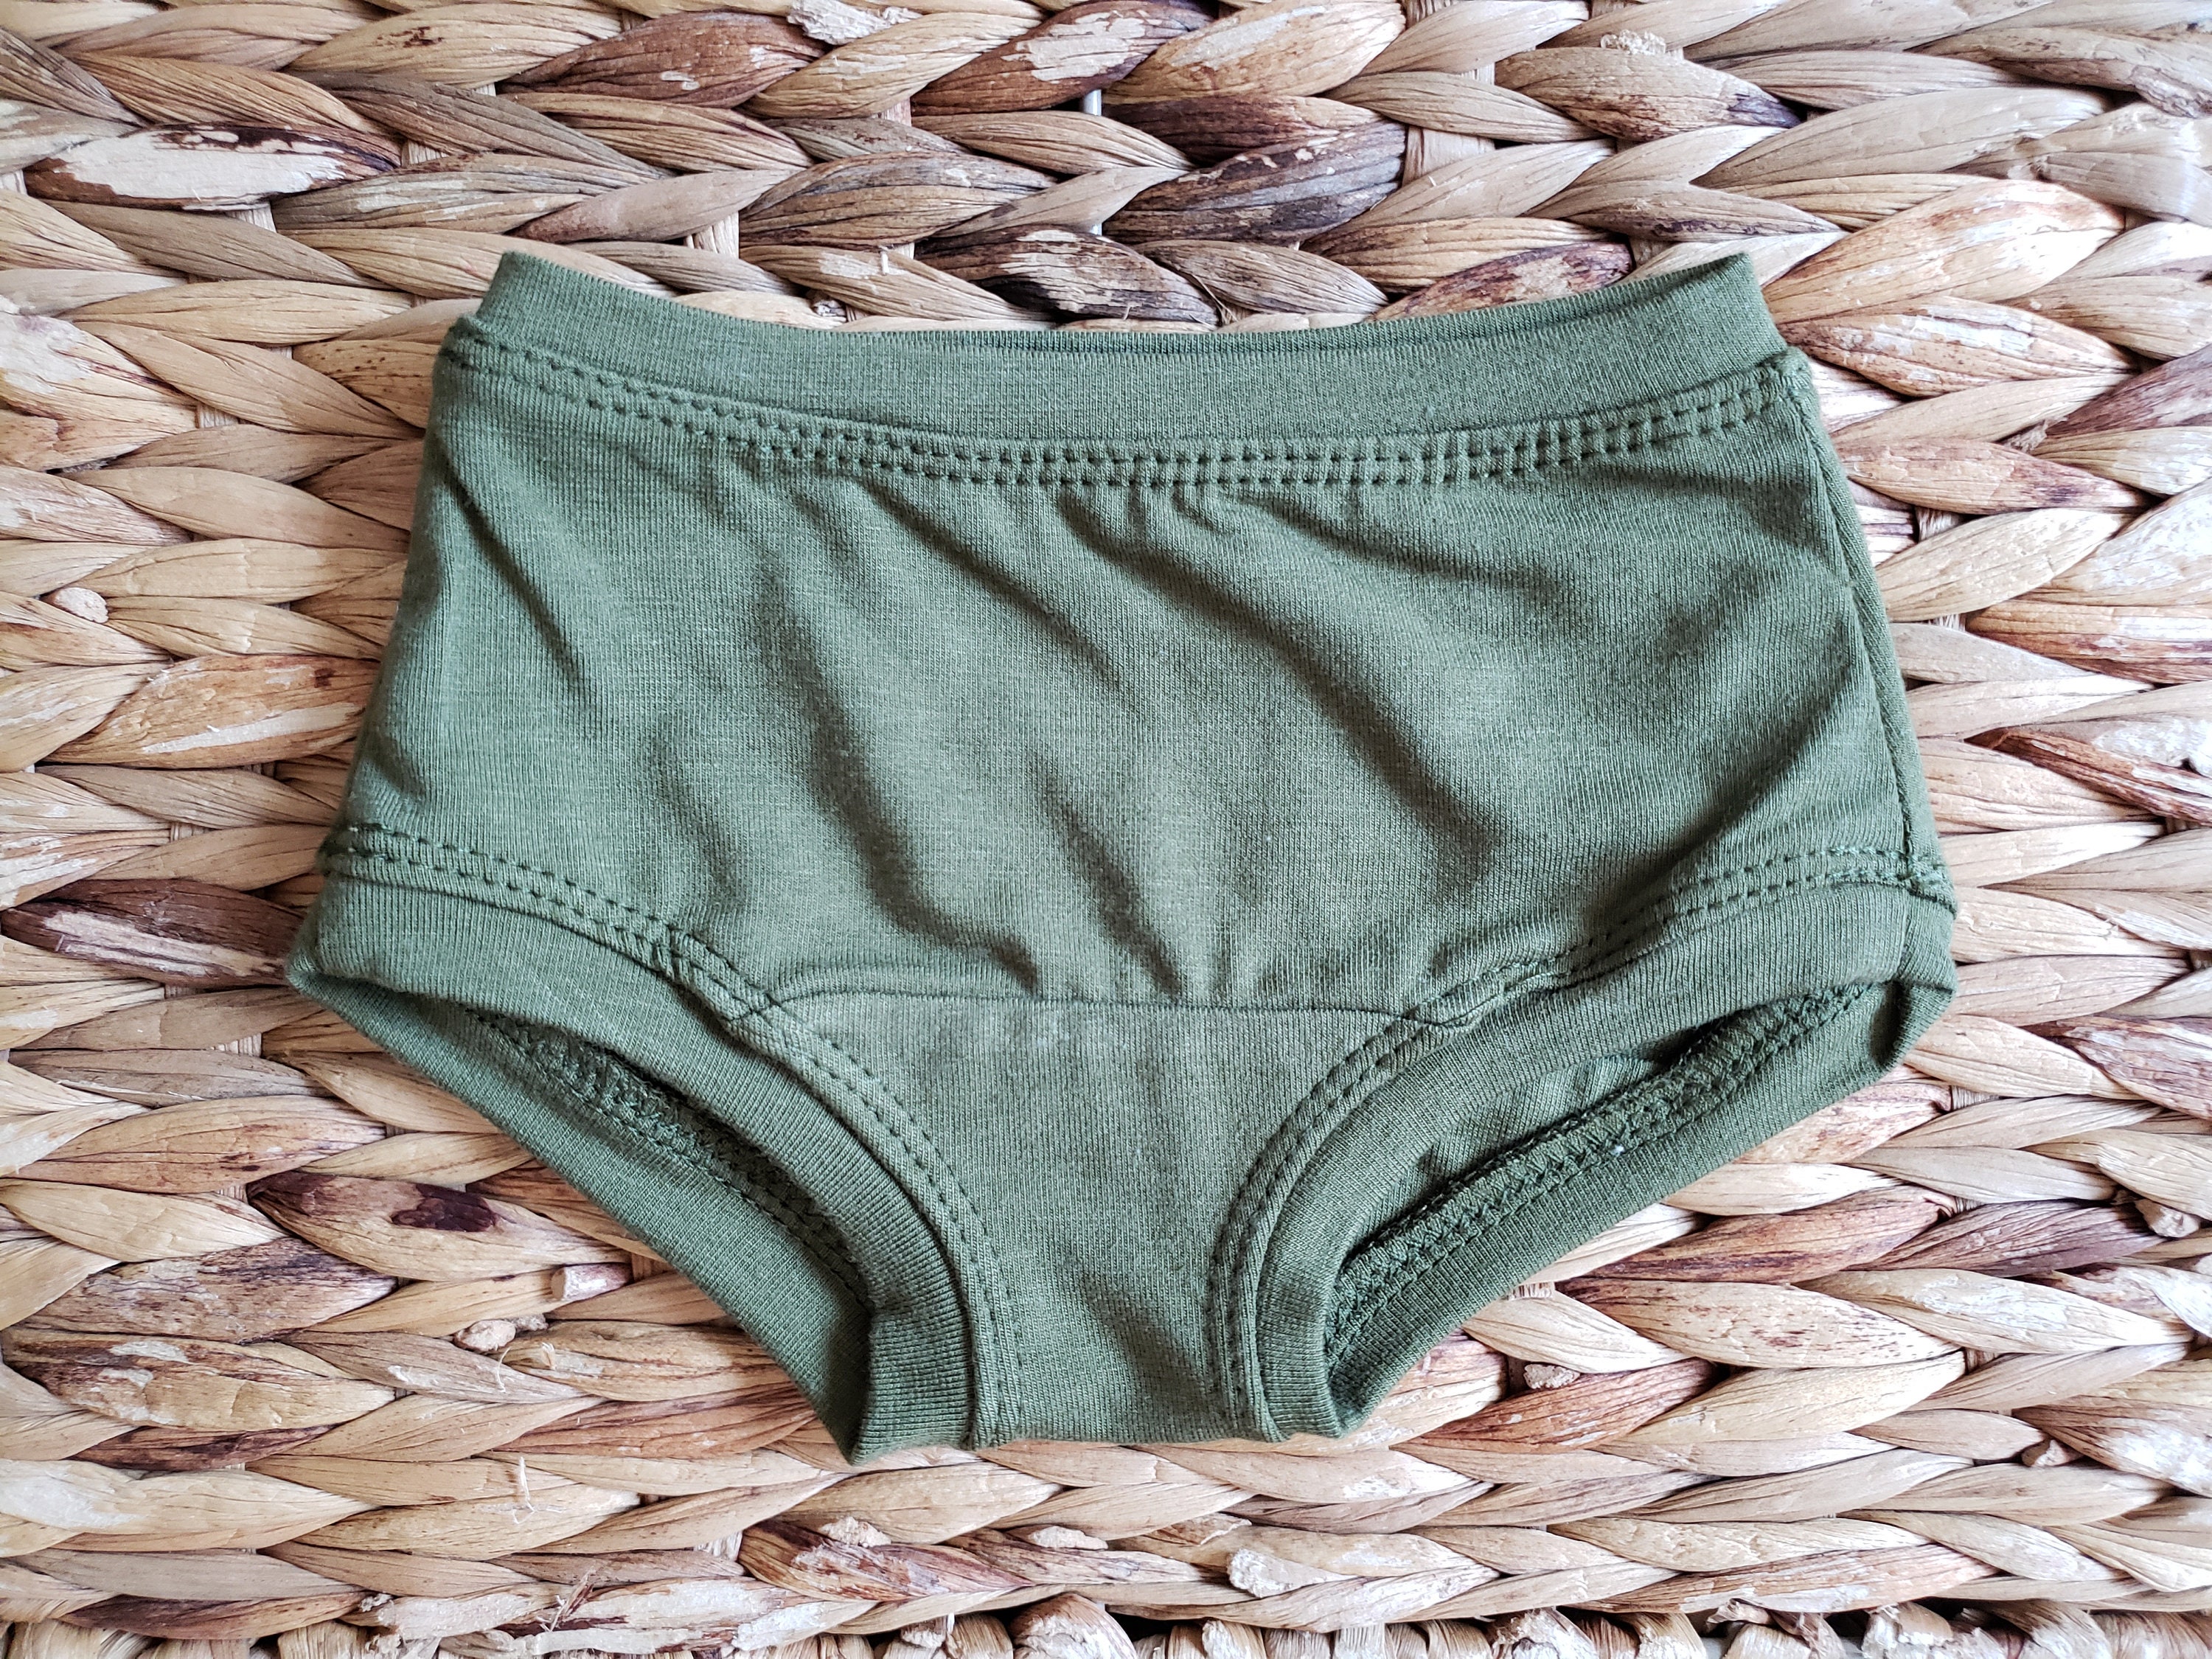 Nylon Panties Comfy Panty Briefs Knickers Unisex Undie Underwear M L XL 2XL  3XL